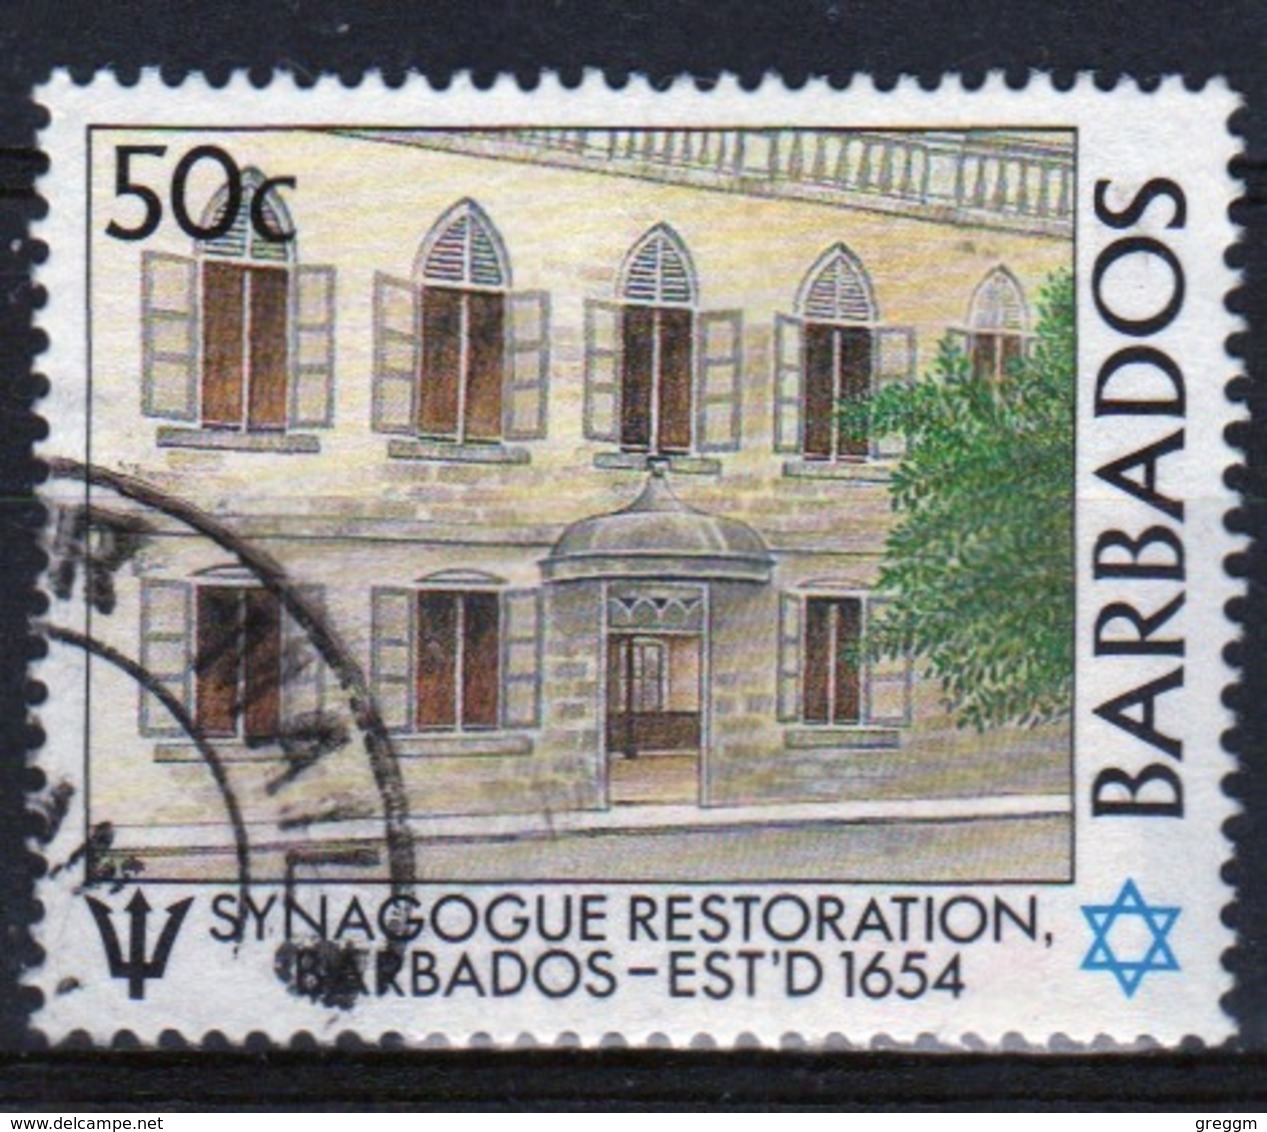 Barbados 1987 Single 50c Stamp Celebrating The Restoration Of Bridgetown Synagogue. - Barbados (1966-...)